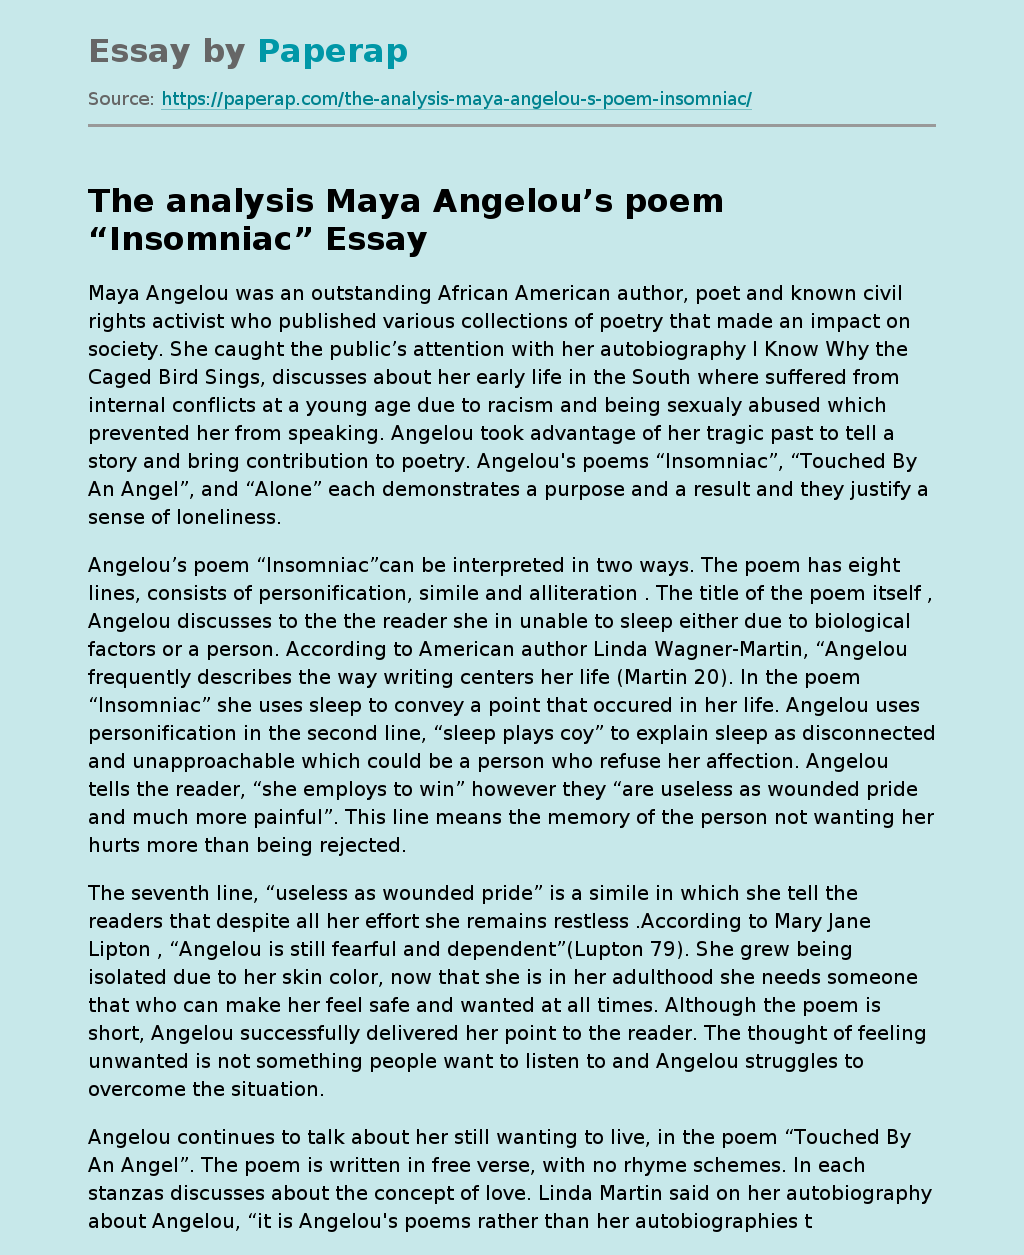 The analysis Maya Angelou’s poem “Insomniac”